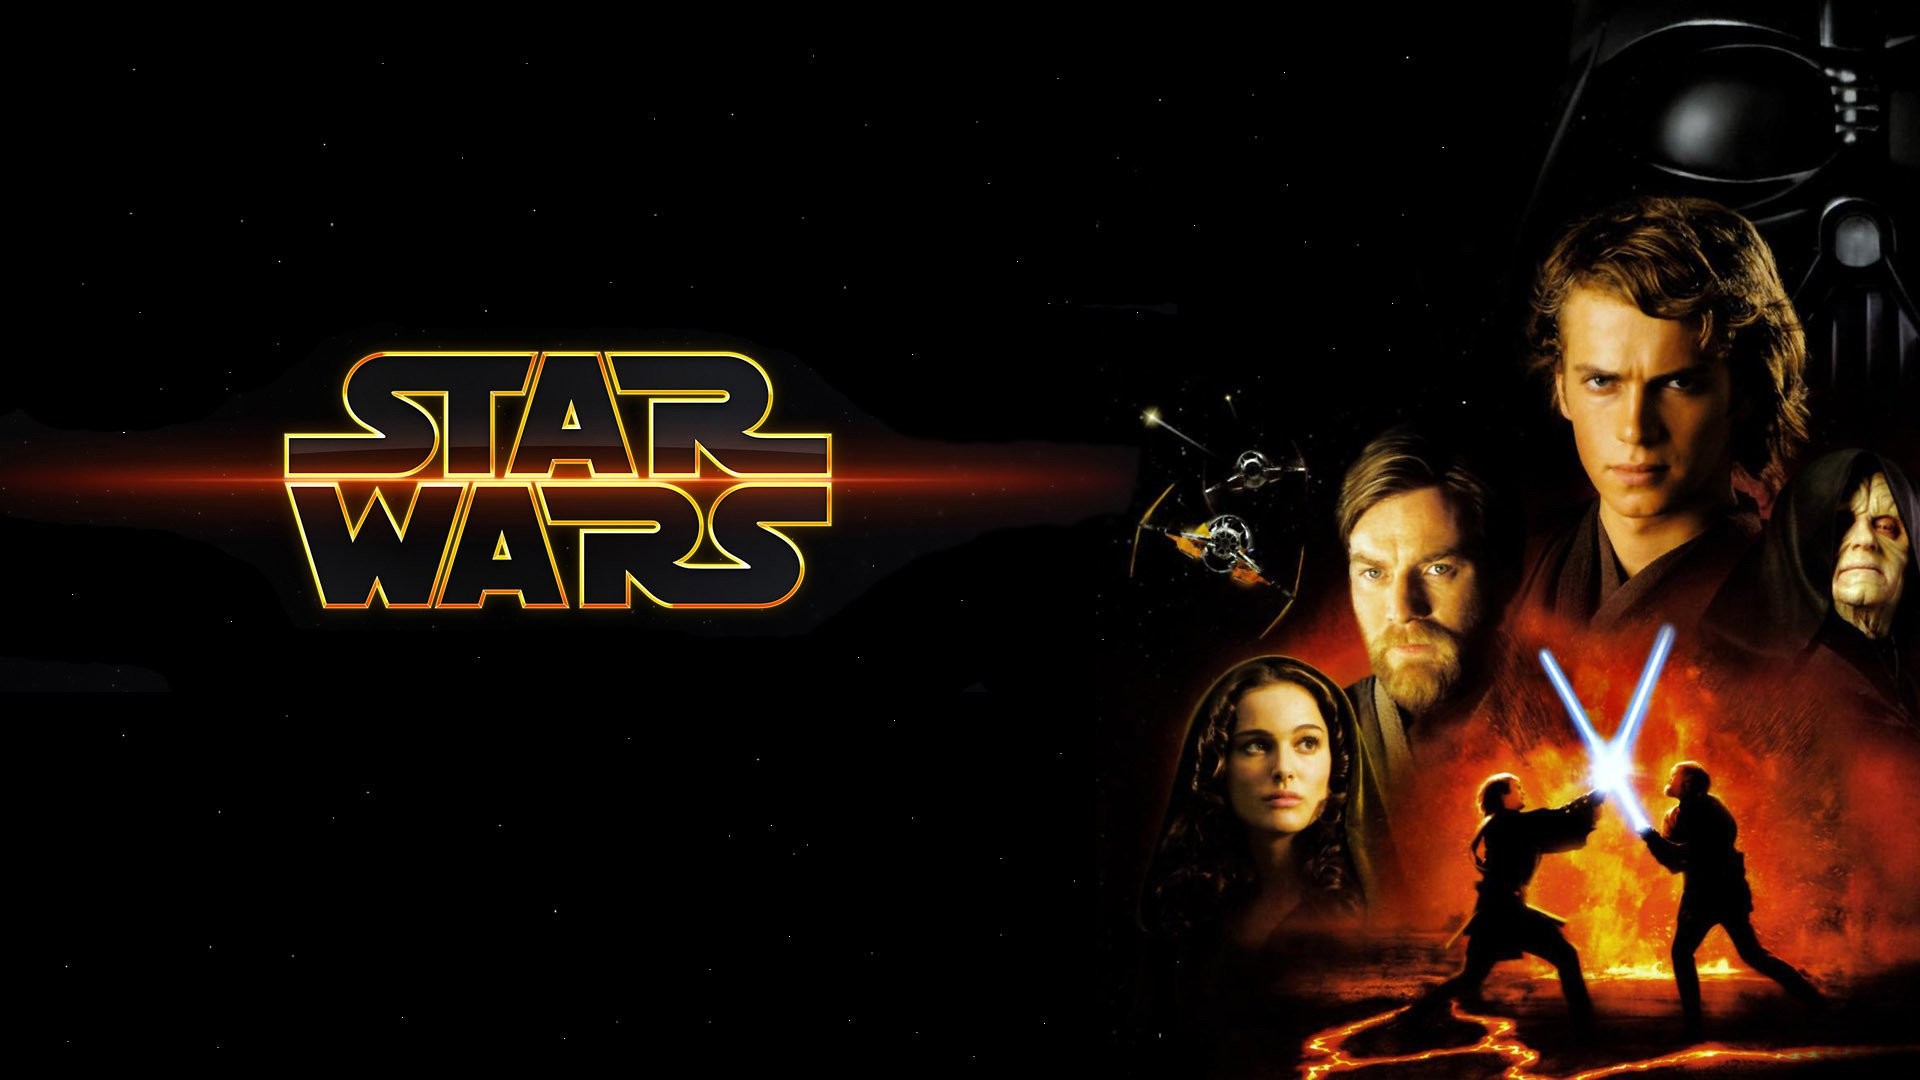 Obi Wan Kenobi Padm Amidala Movie – Star Wars Episode III Revenge of the Sith Padm Amidala Darth Vader Anakin